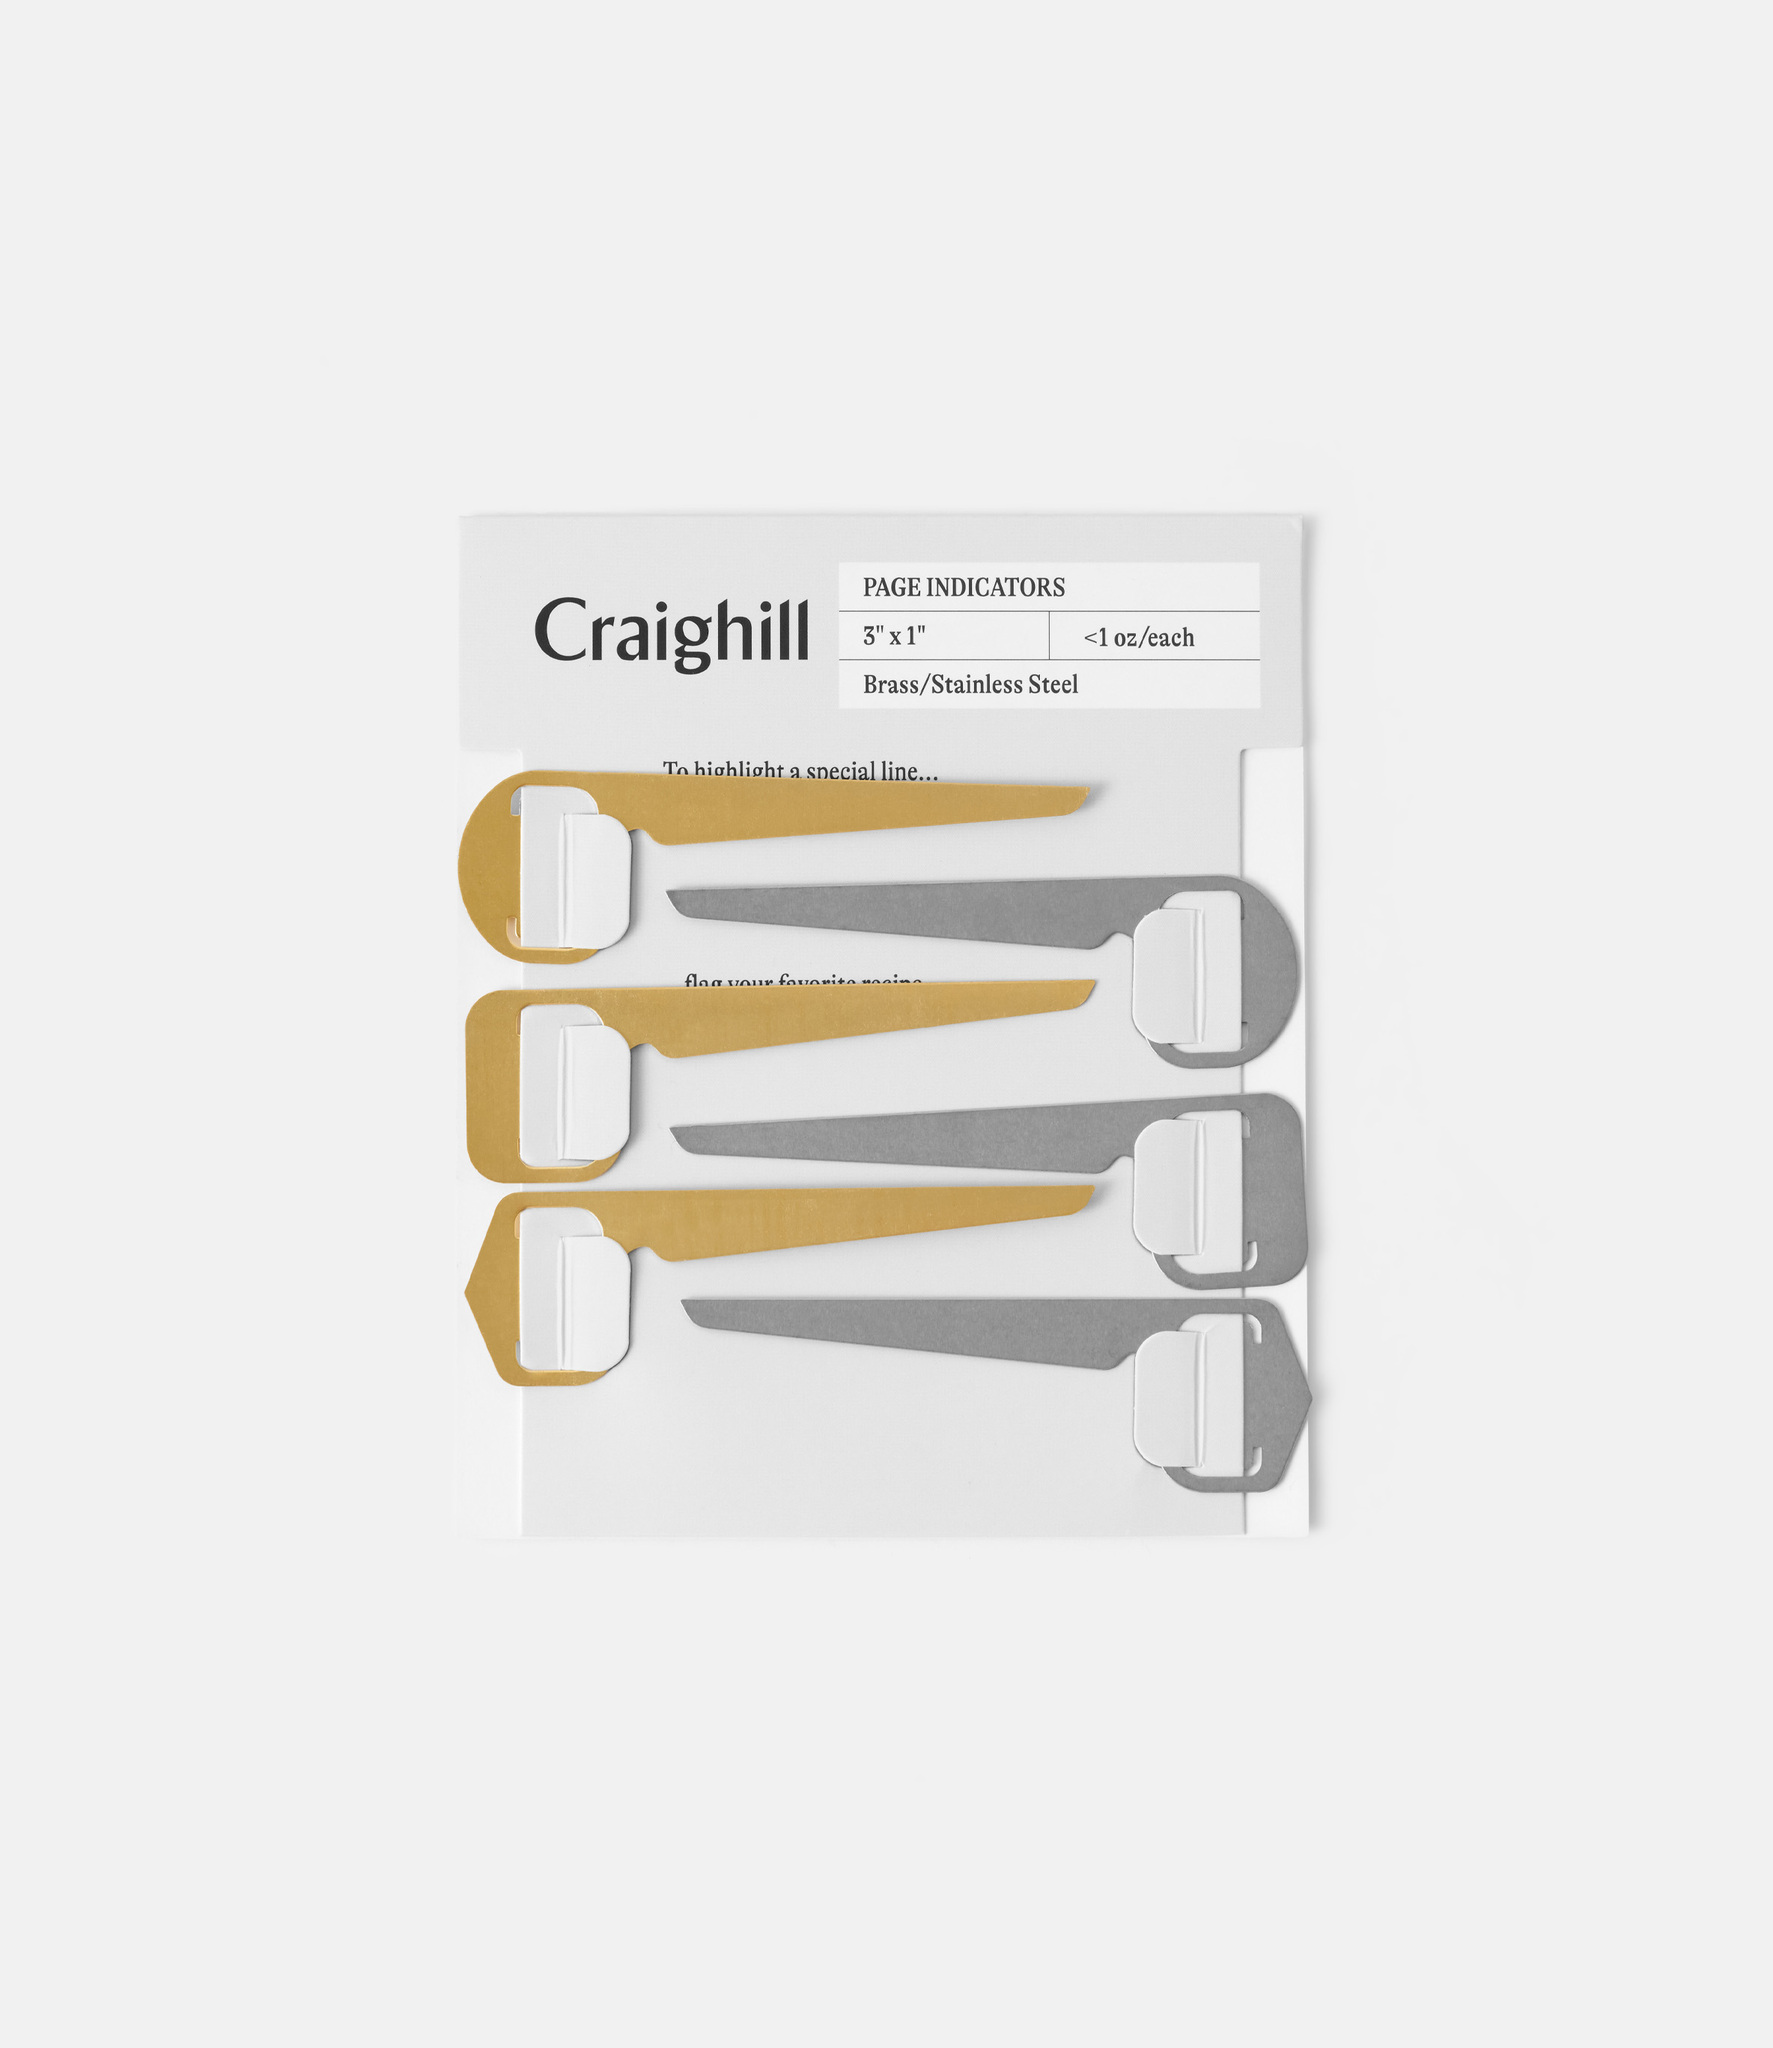 Craighill Page Indicators — набор закладок